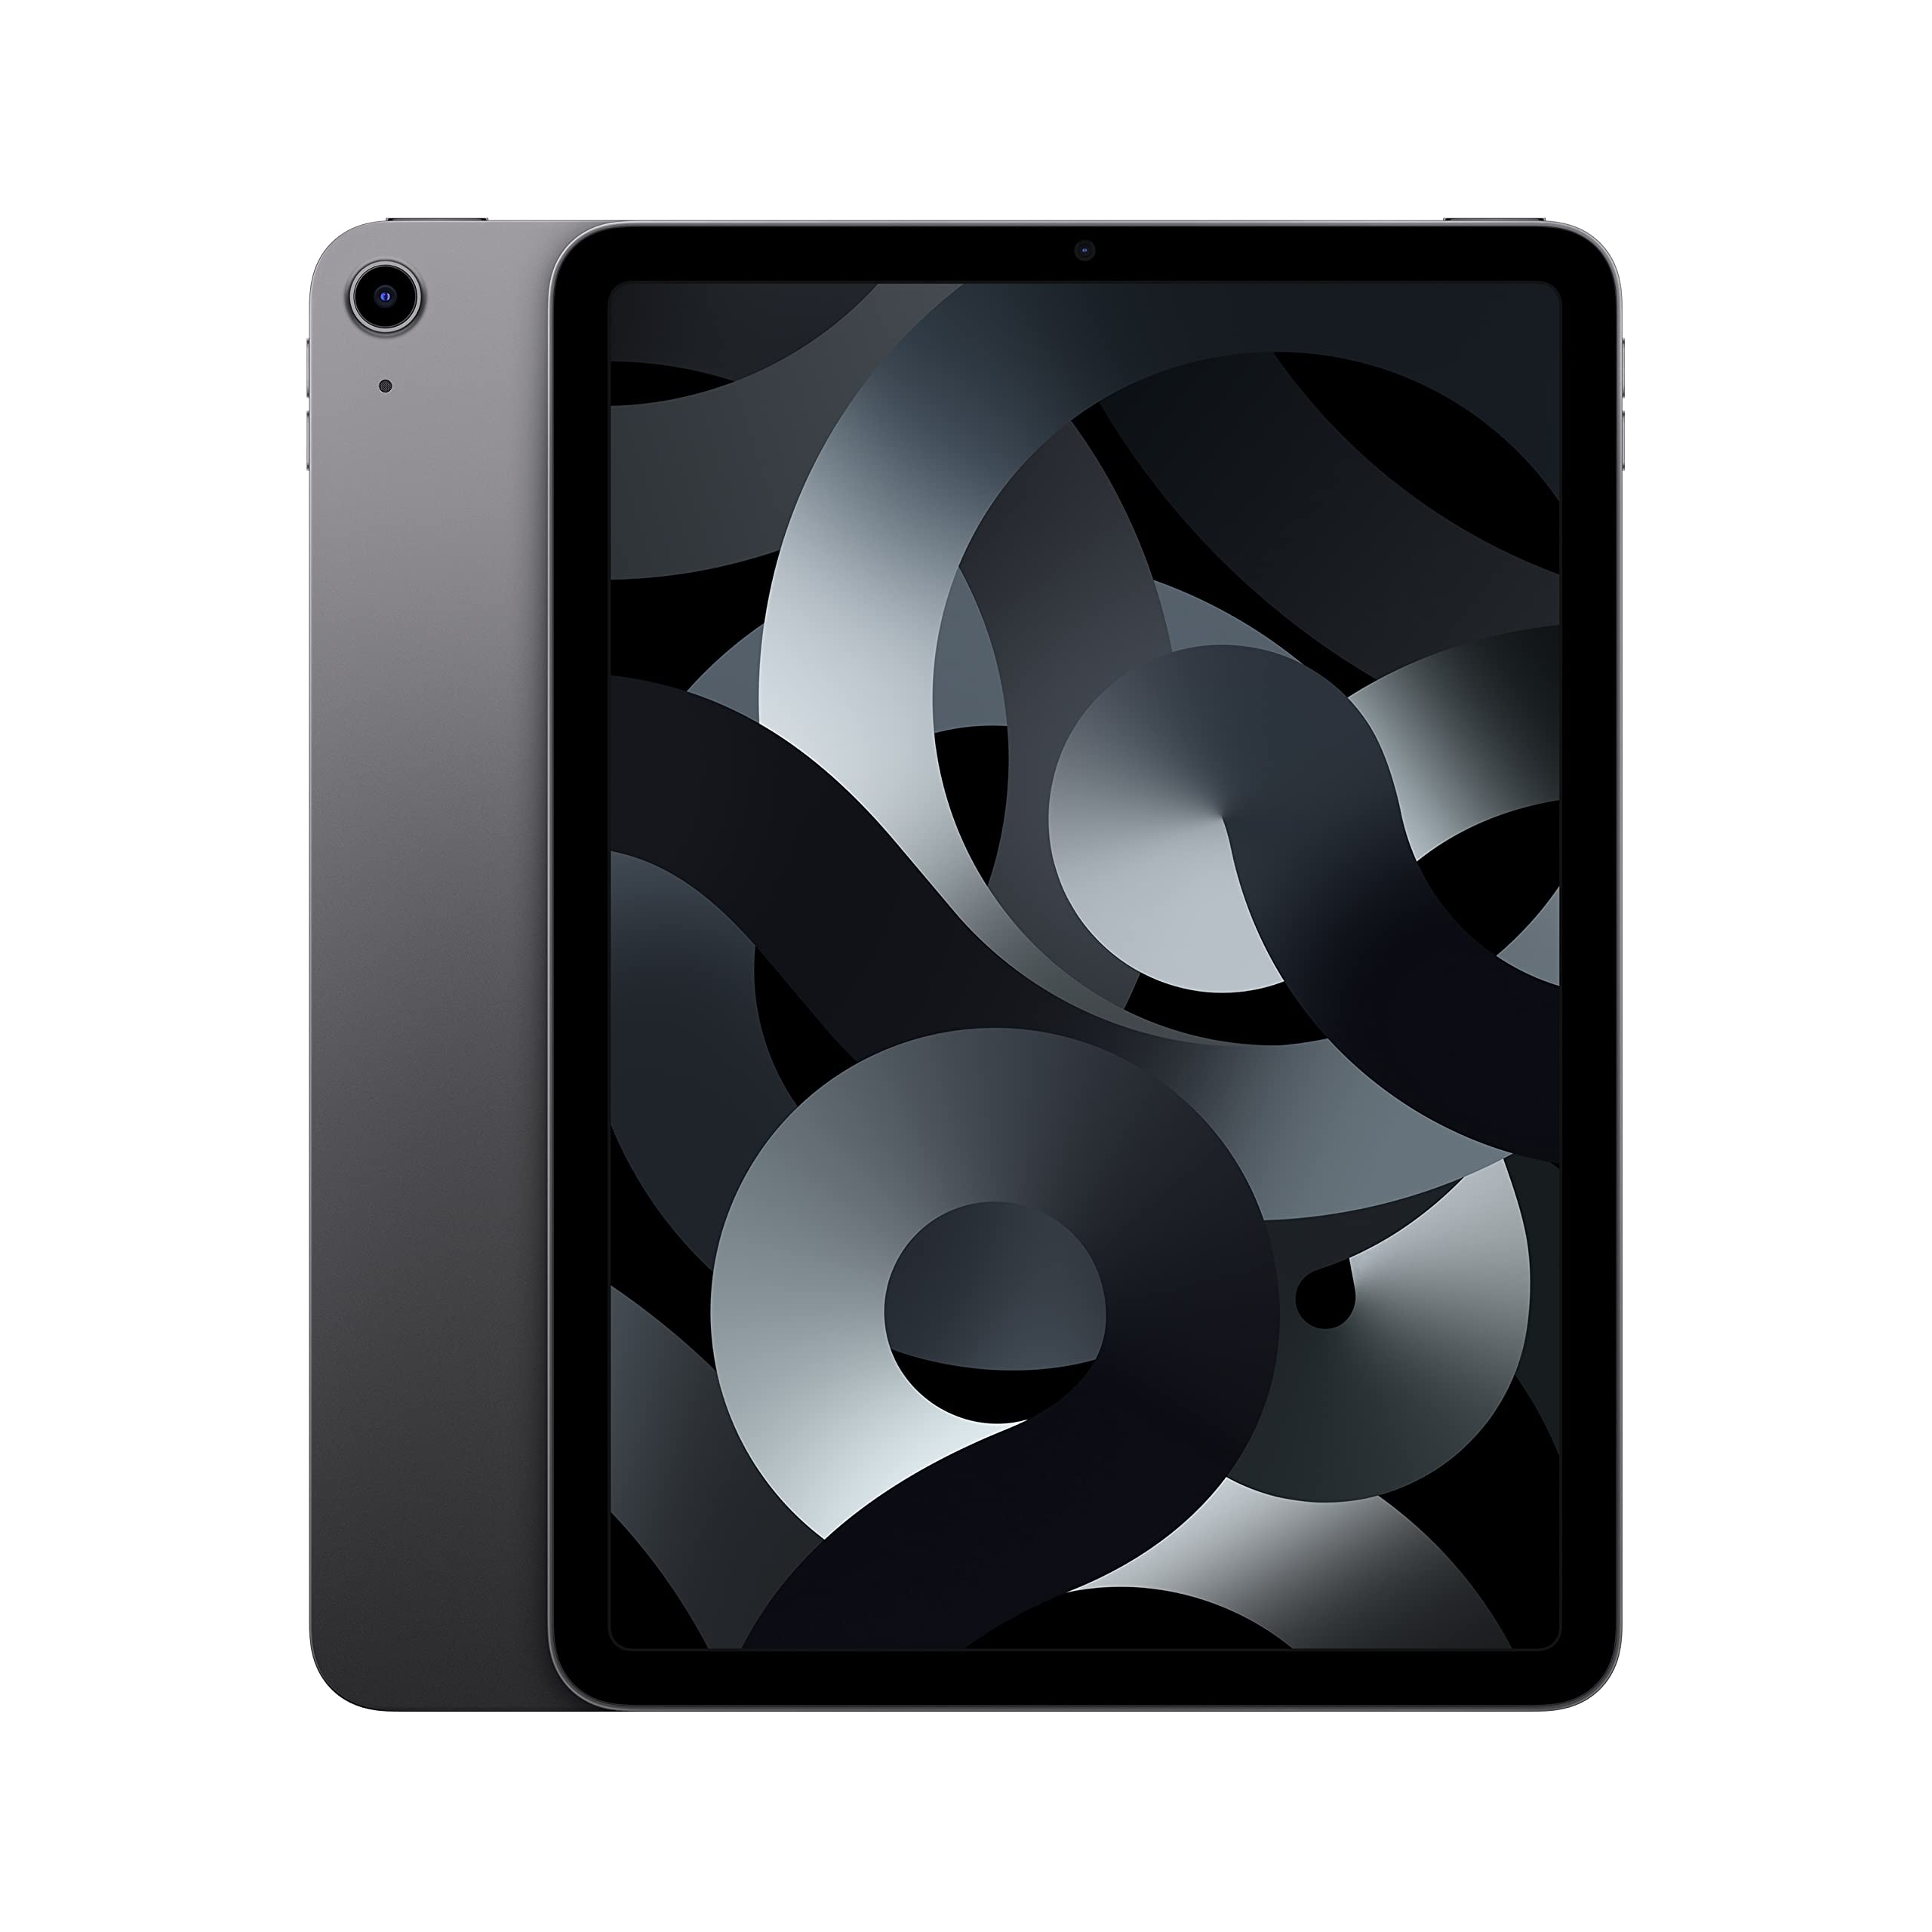 iPad Air 5th Gen (M1) 64GB $499/256GB $649 (Amazon) $499.99